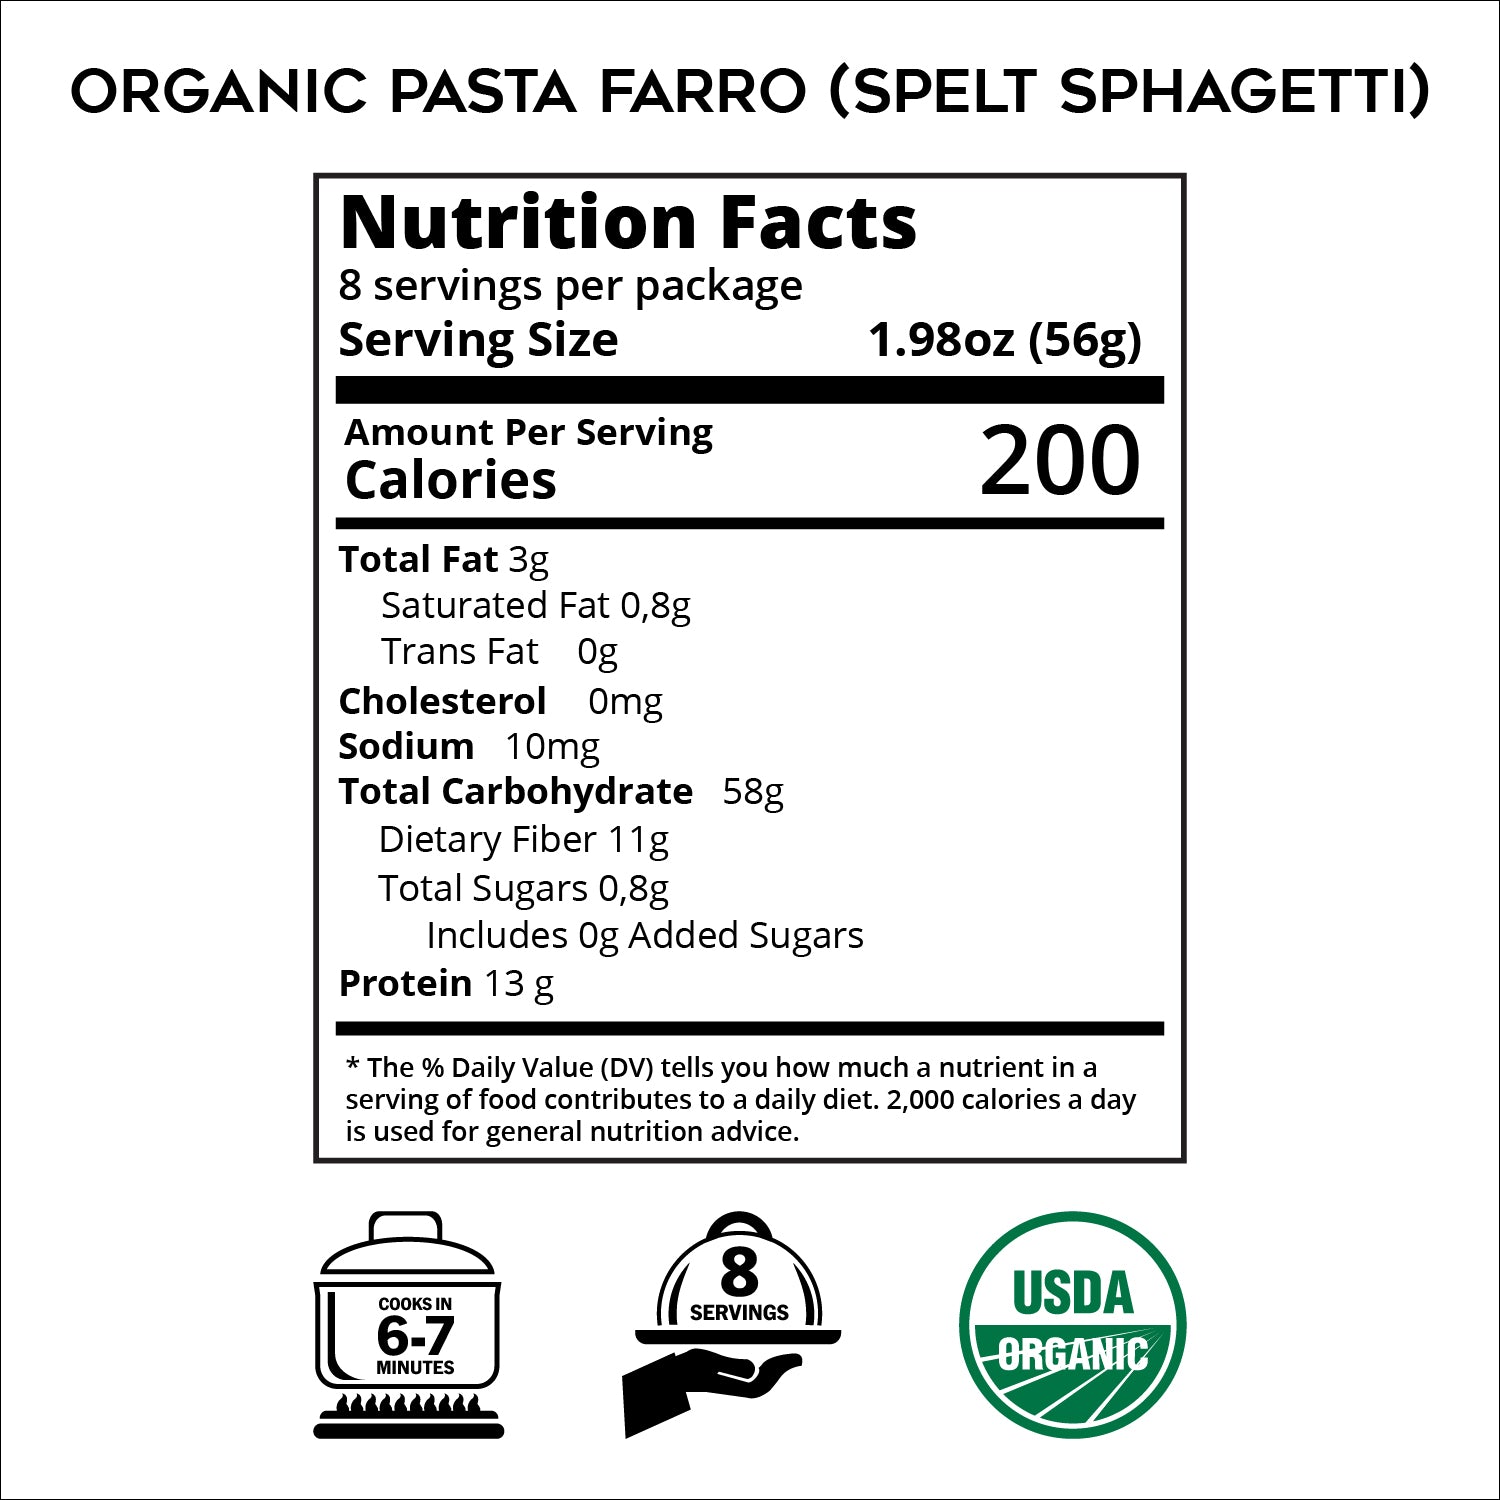 Organic Pasta Farro (Spelt Sphagetti) - Made in Italy by Morelli